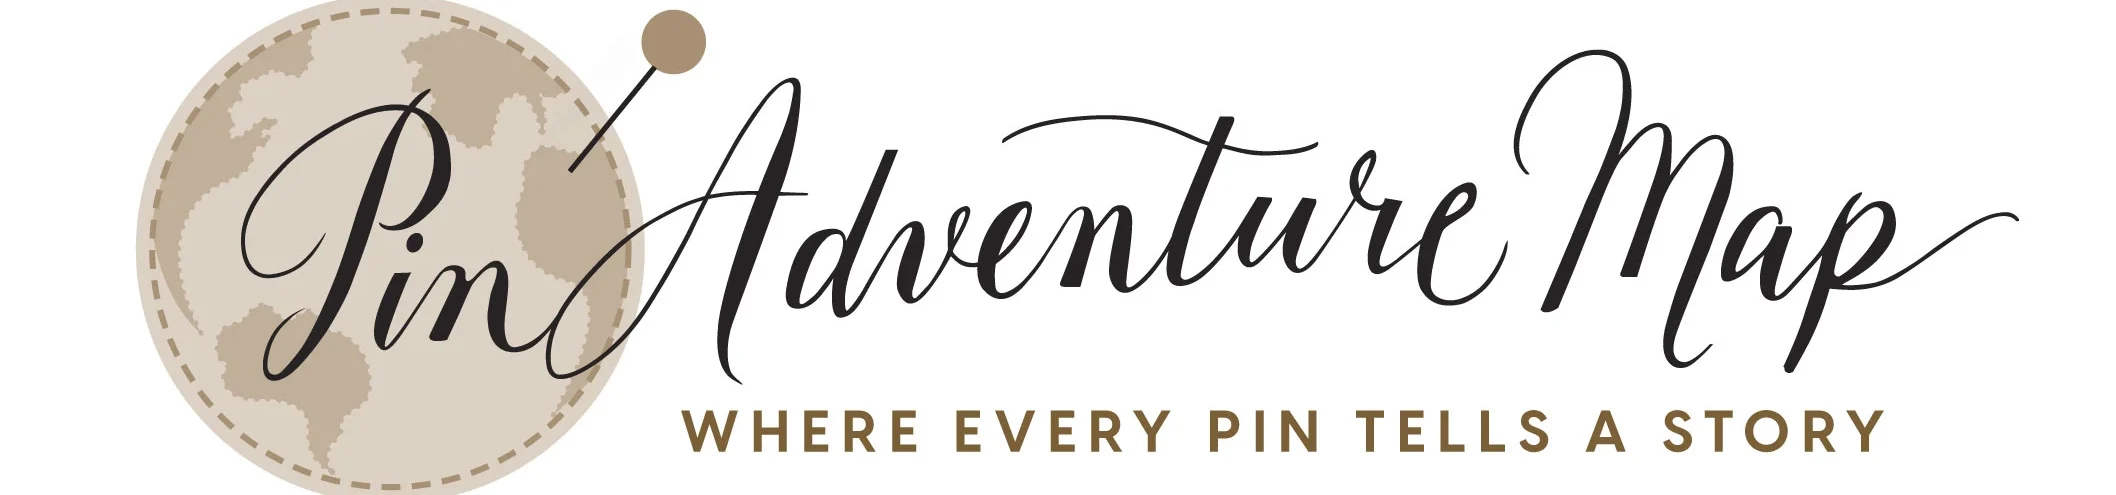 Pin adventure map logo